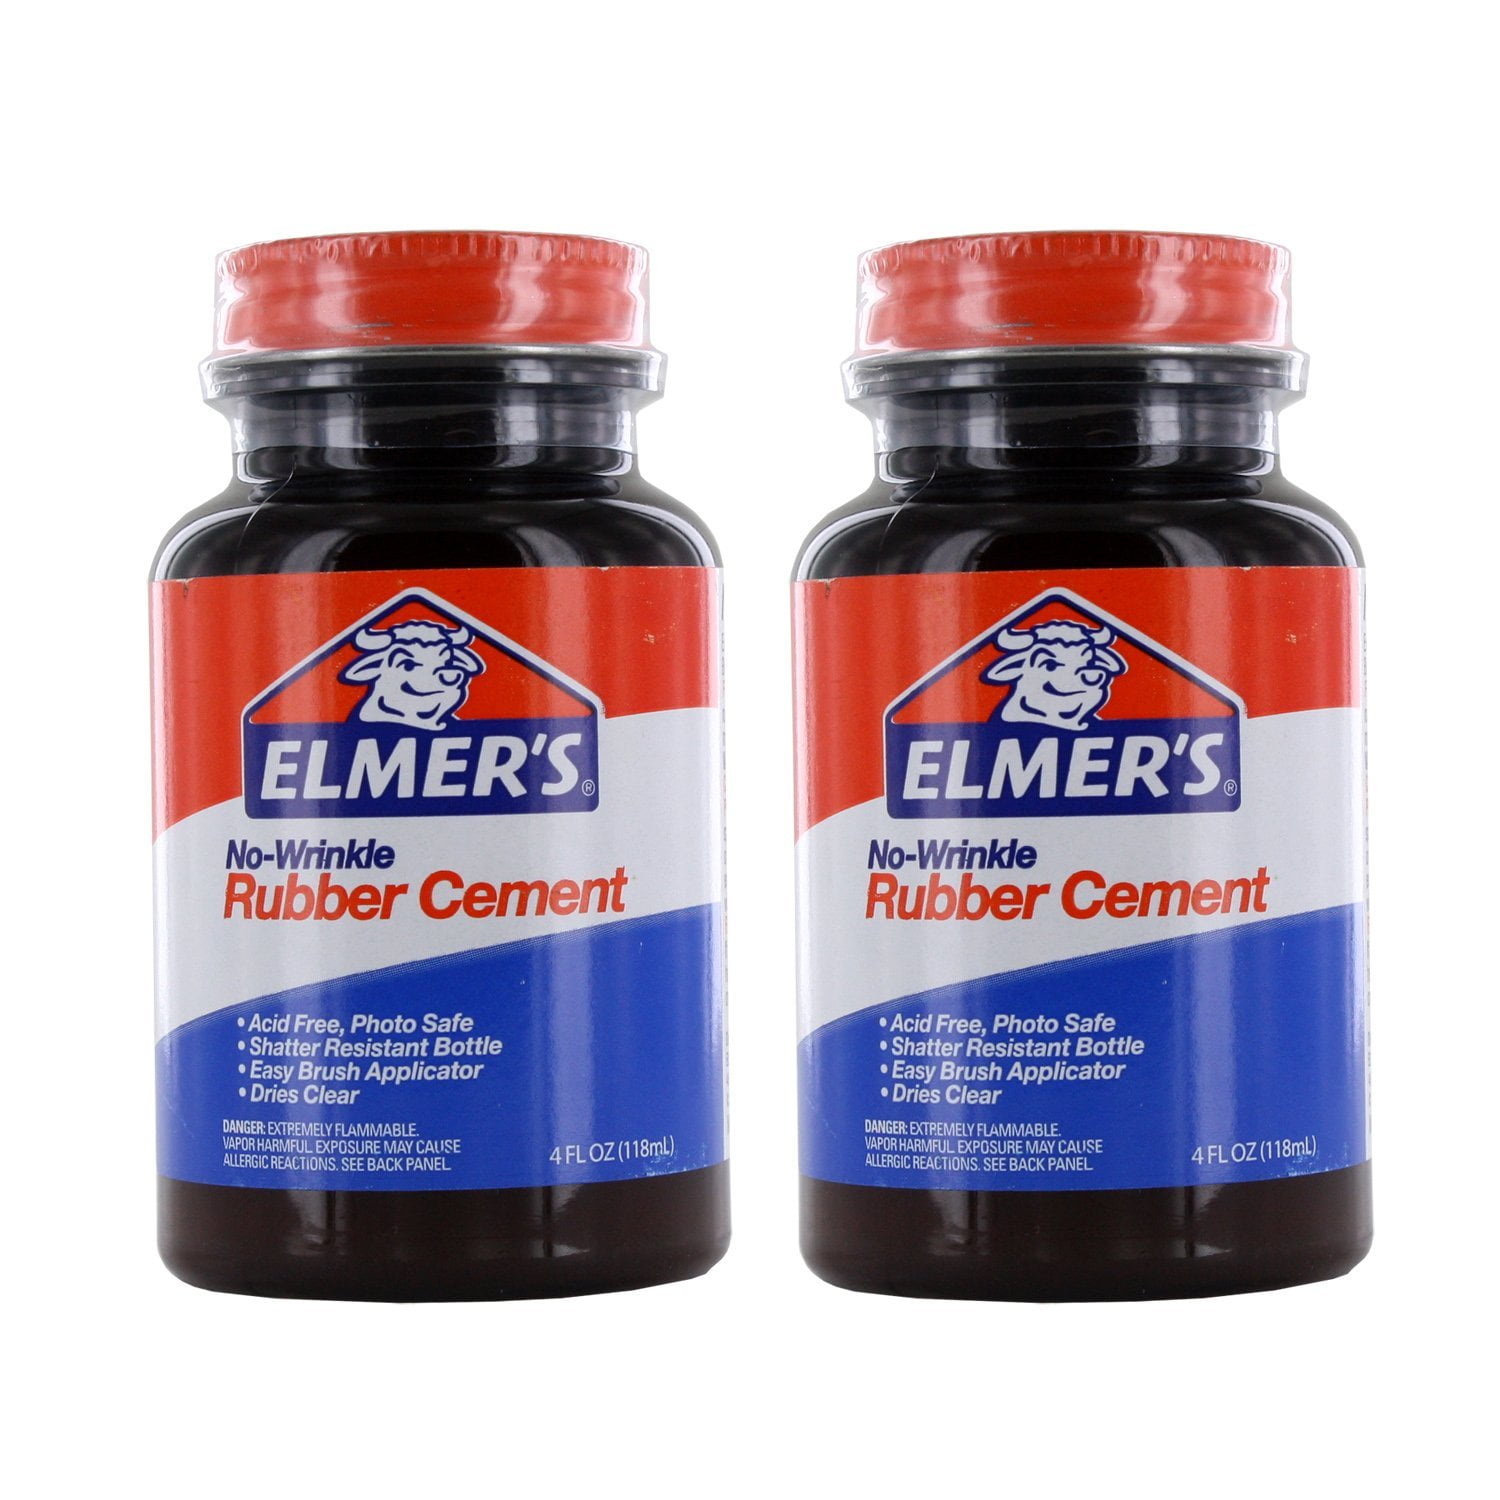 Elmer's® Rubber Cement recalled due to flammability hazard - Canada.ca